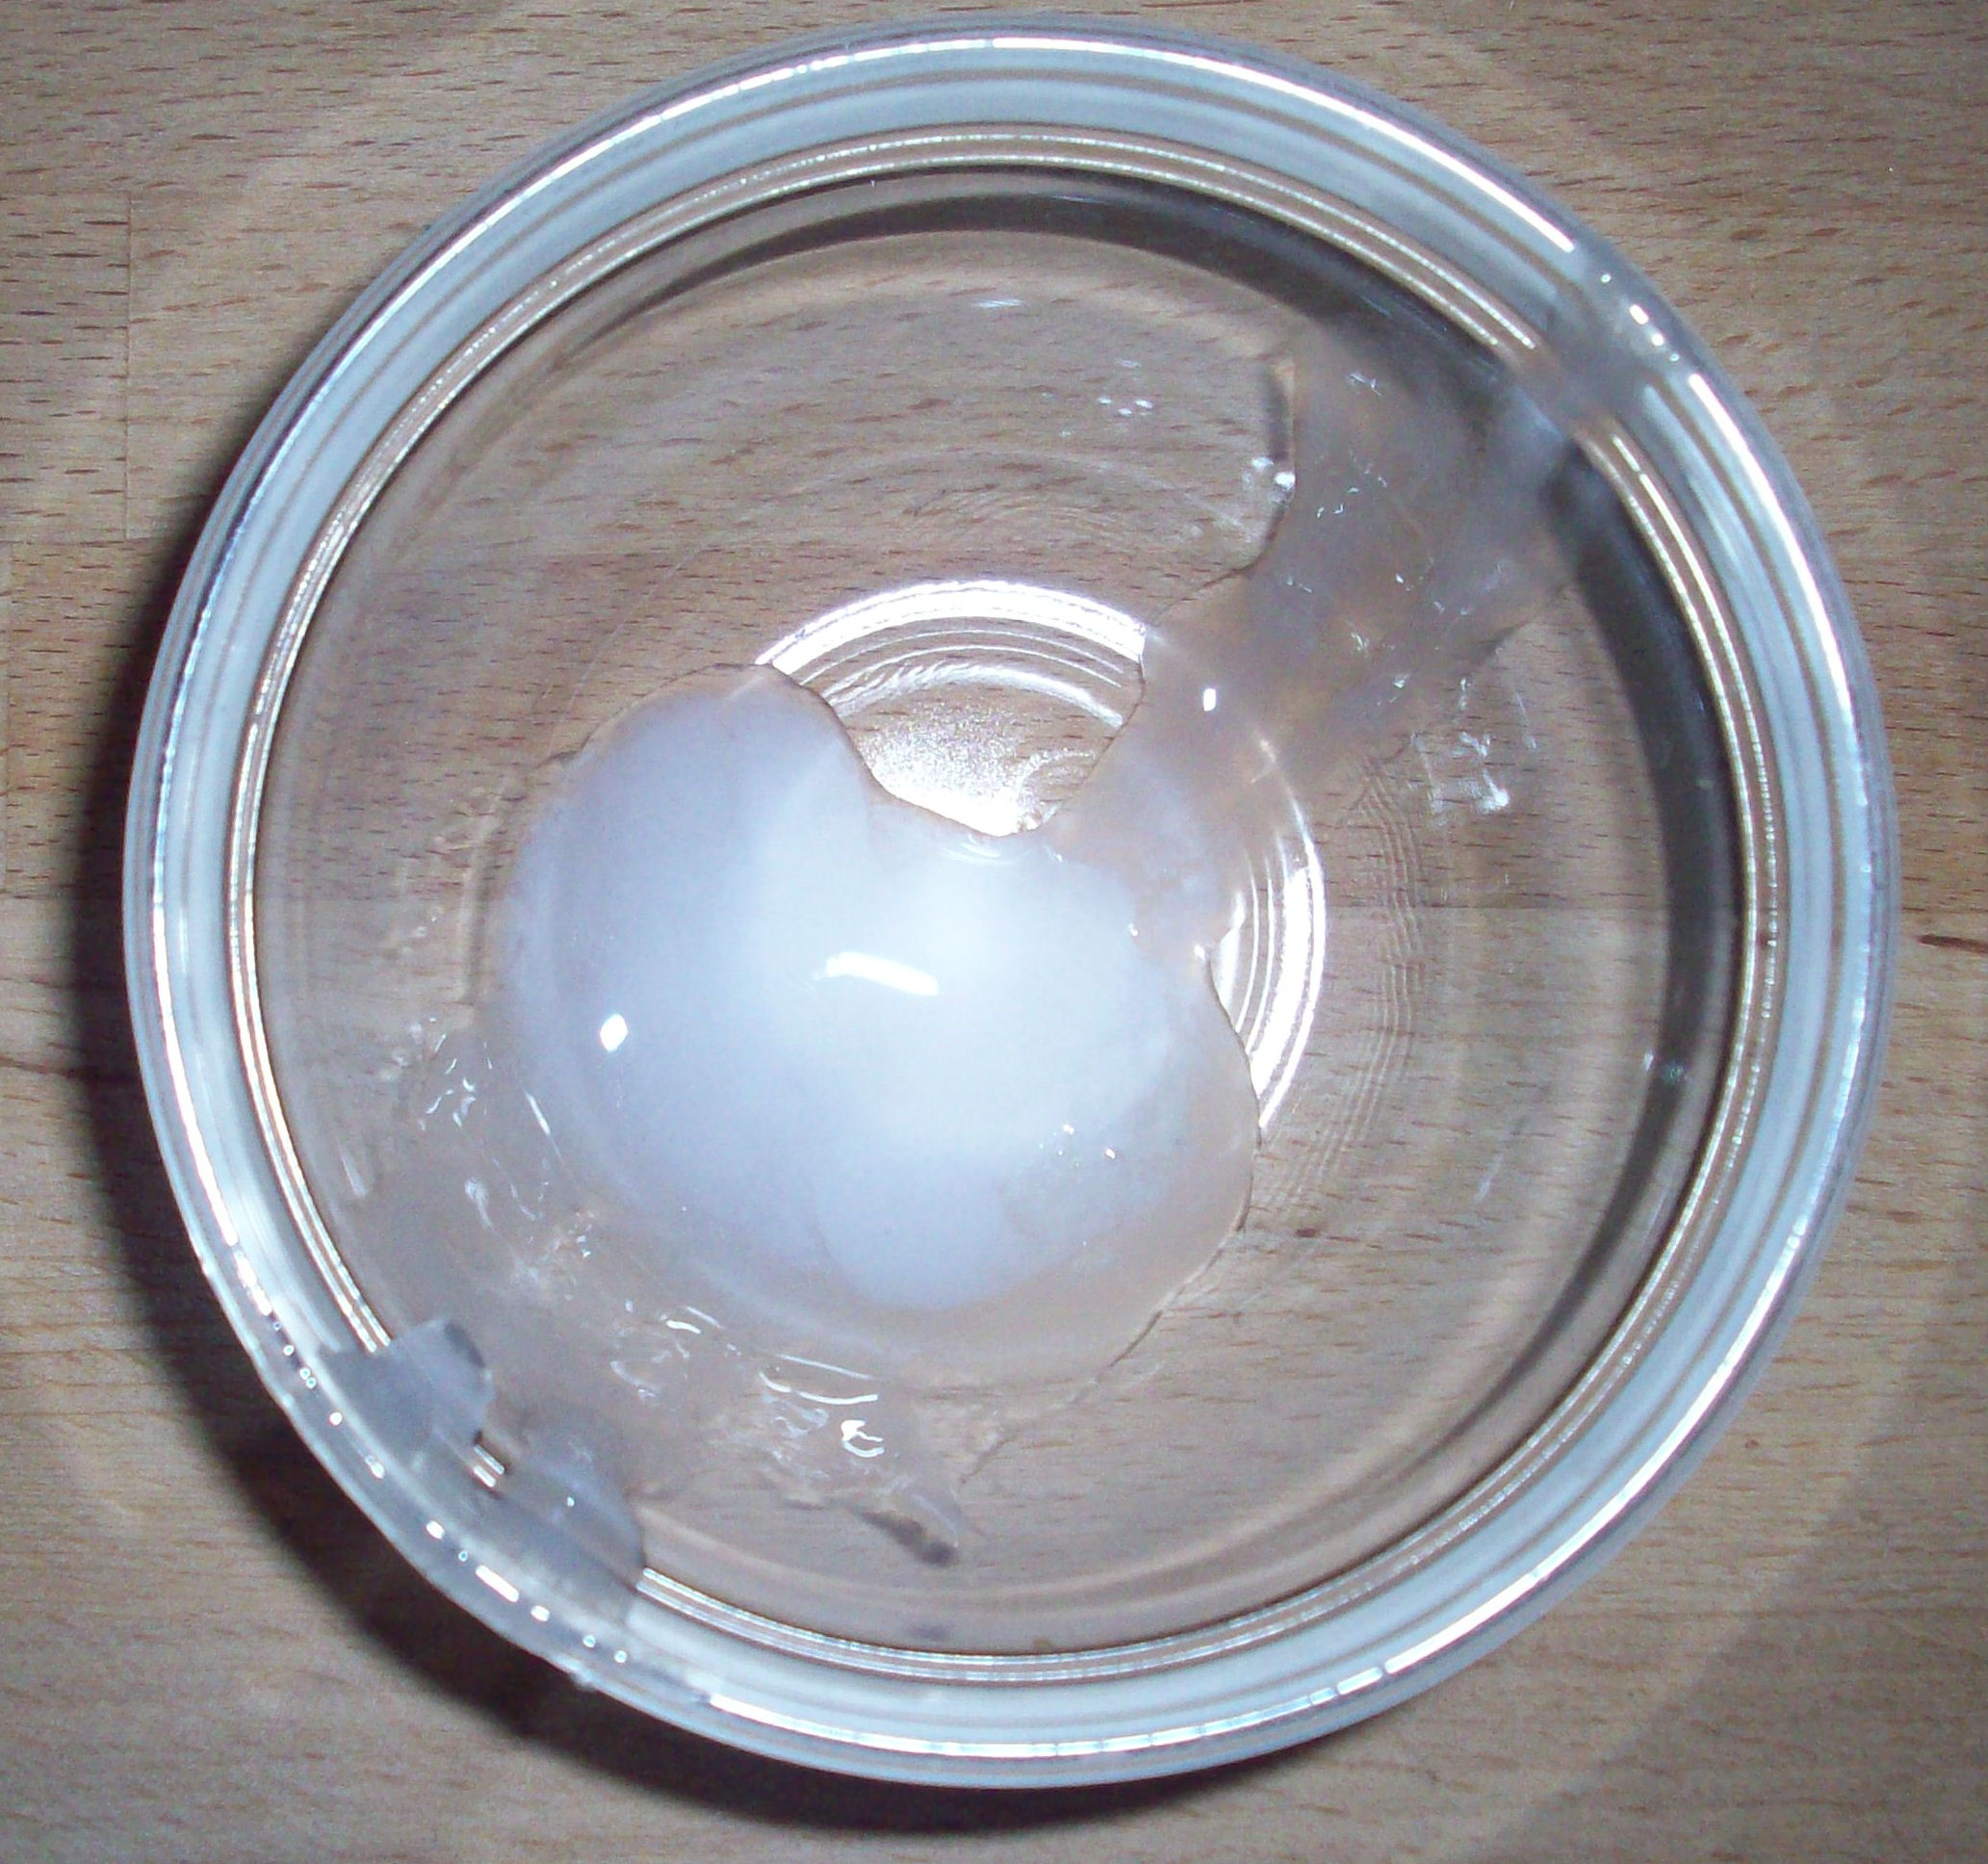 http://upload.wikimedia.org/wikipedia/commons/6/6d/Semen-sperma.jpg